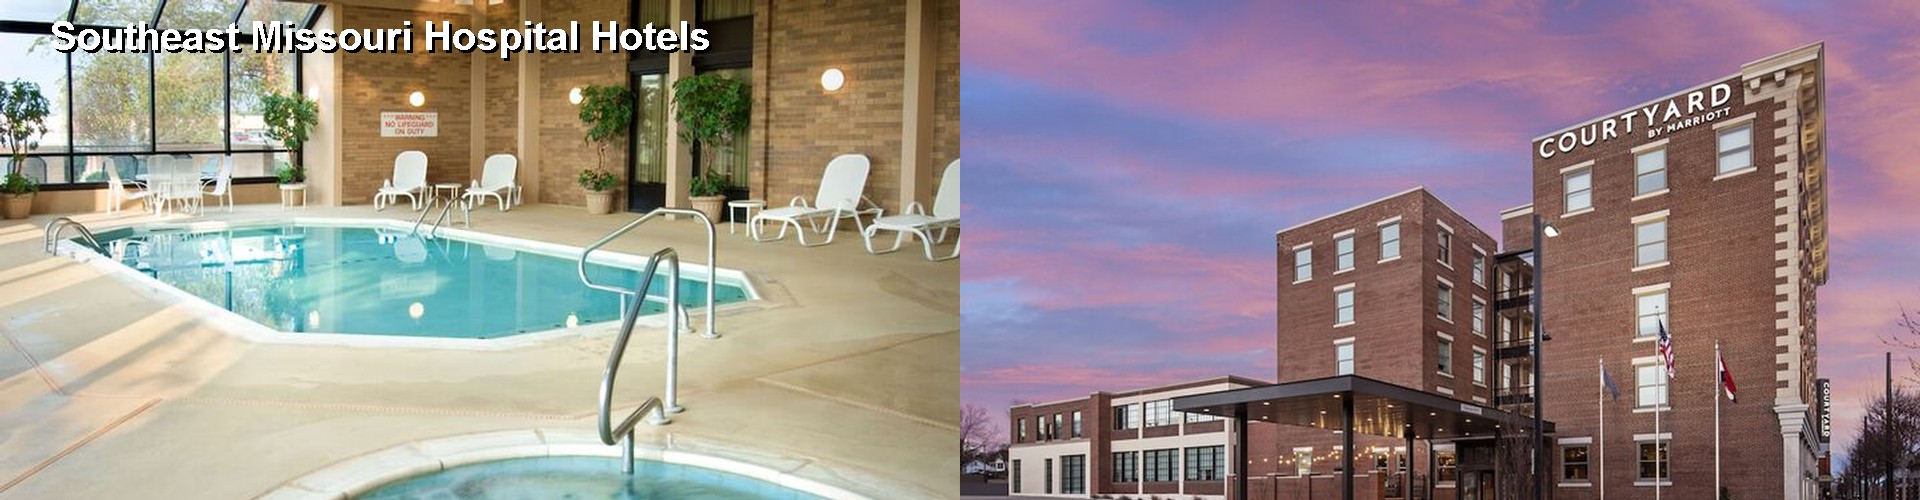 5 Best Hotels near Southeast Missouri Hospital